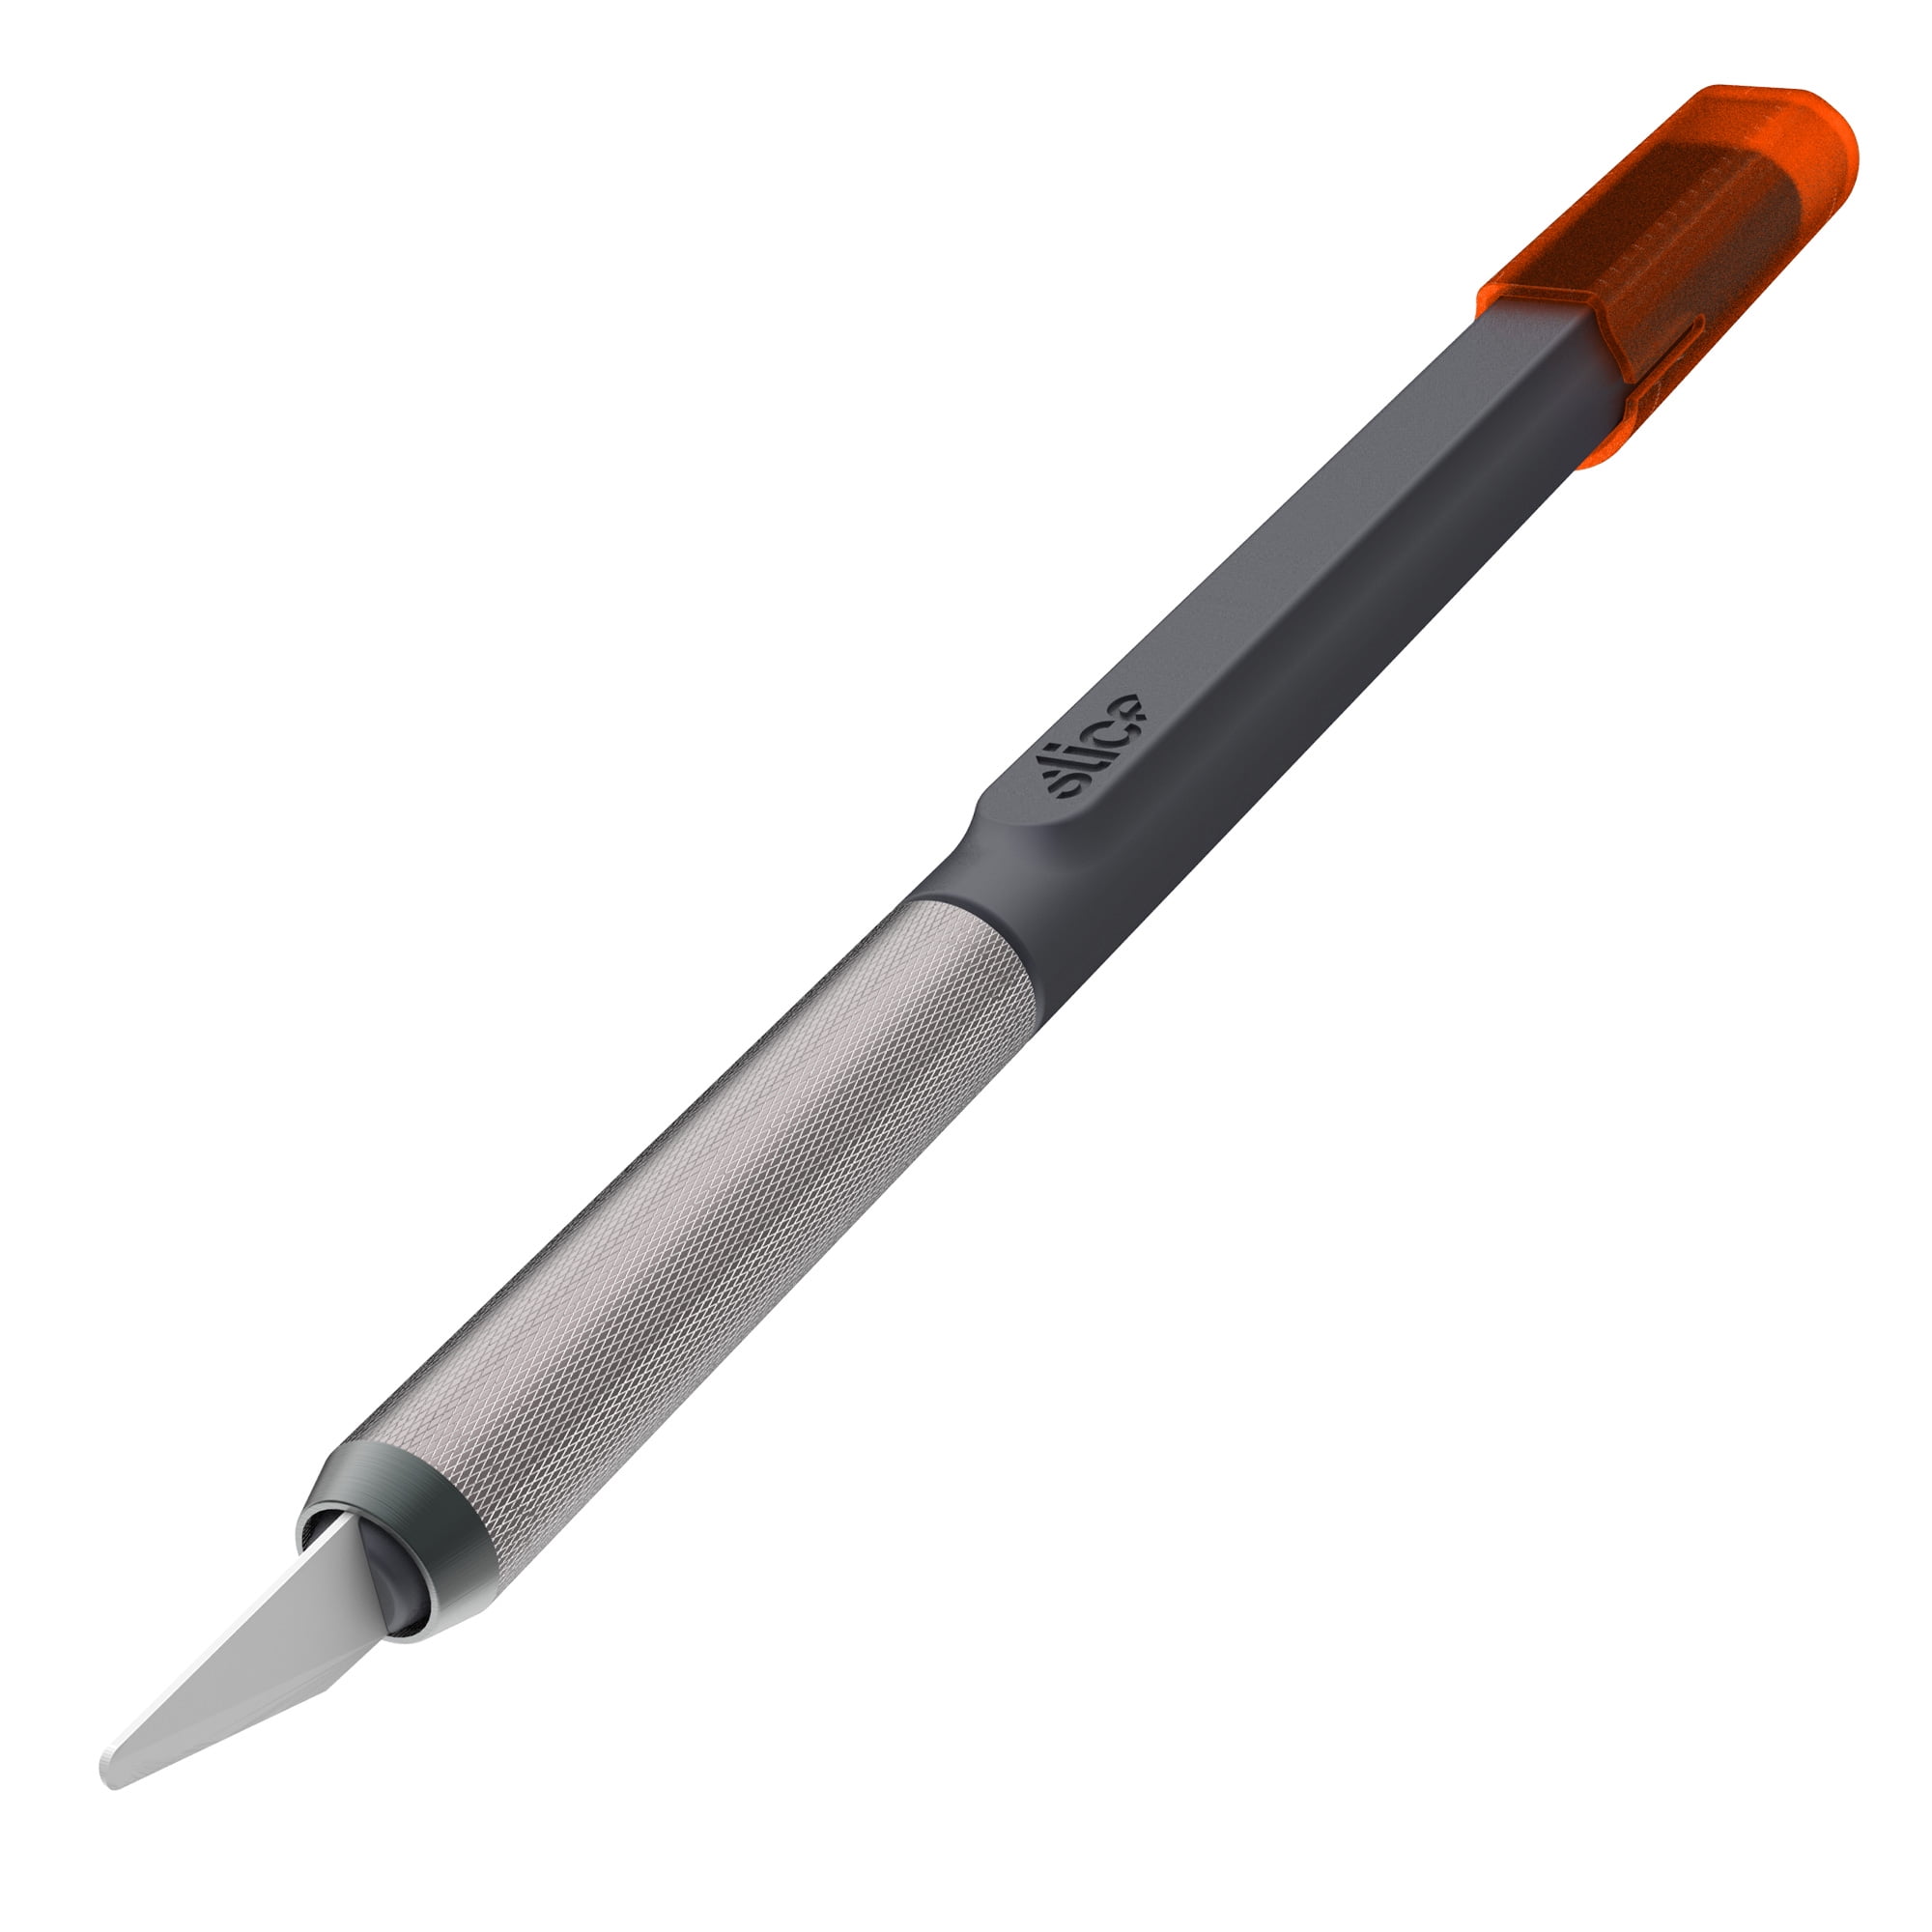 2 Pieces Pen Shape Knife ,Paper Cutter Pen,Precision Knife with Safety Cap Creative Pen Shape Ceramic Blade Knife Pen Shape Finger Protection